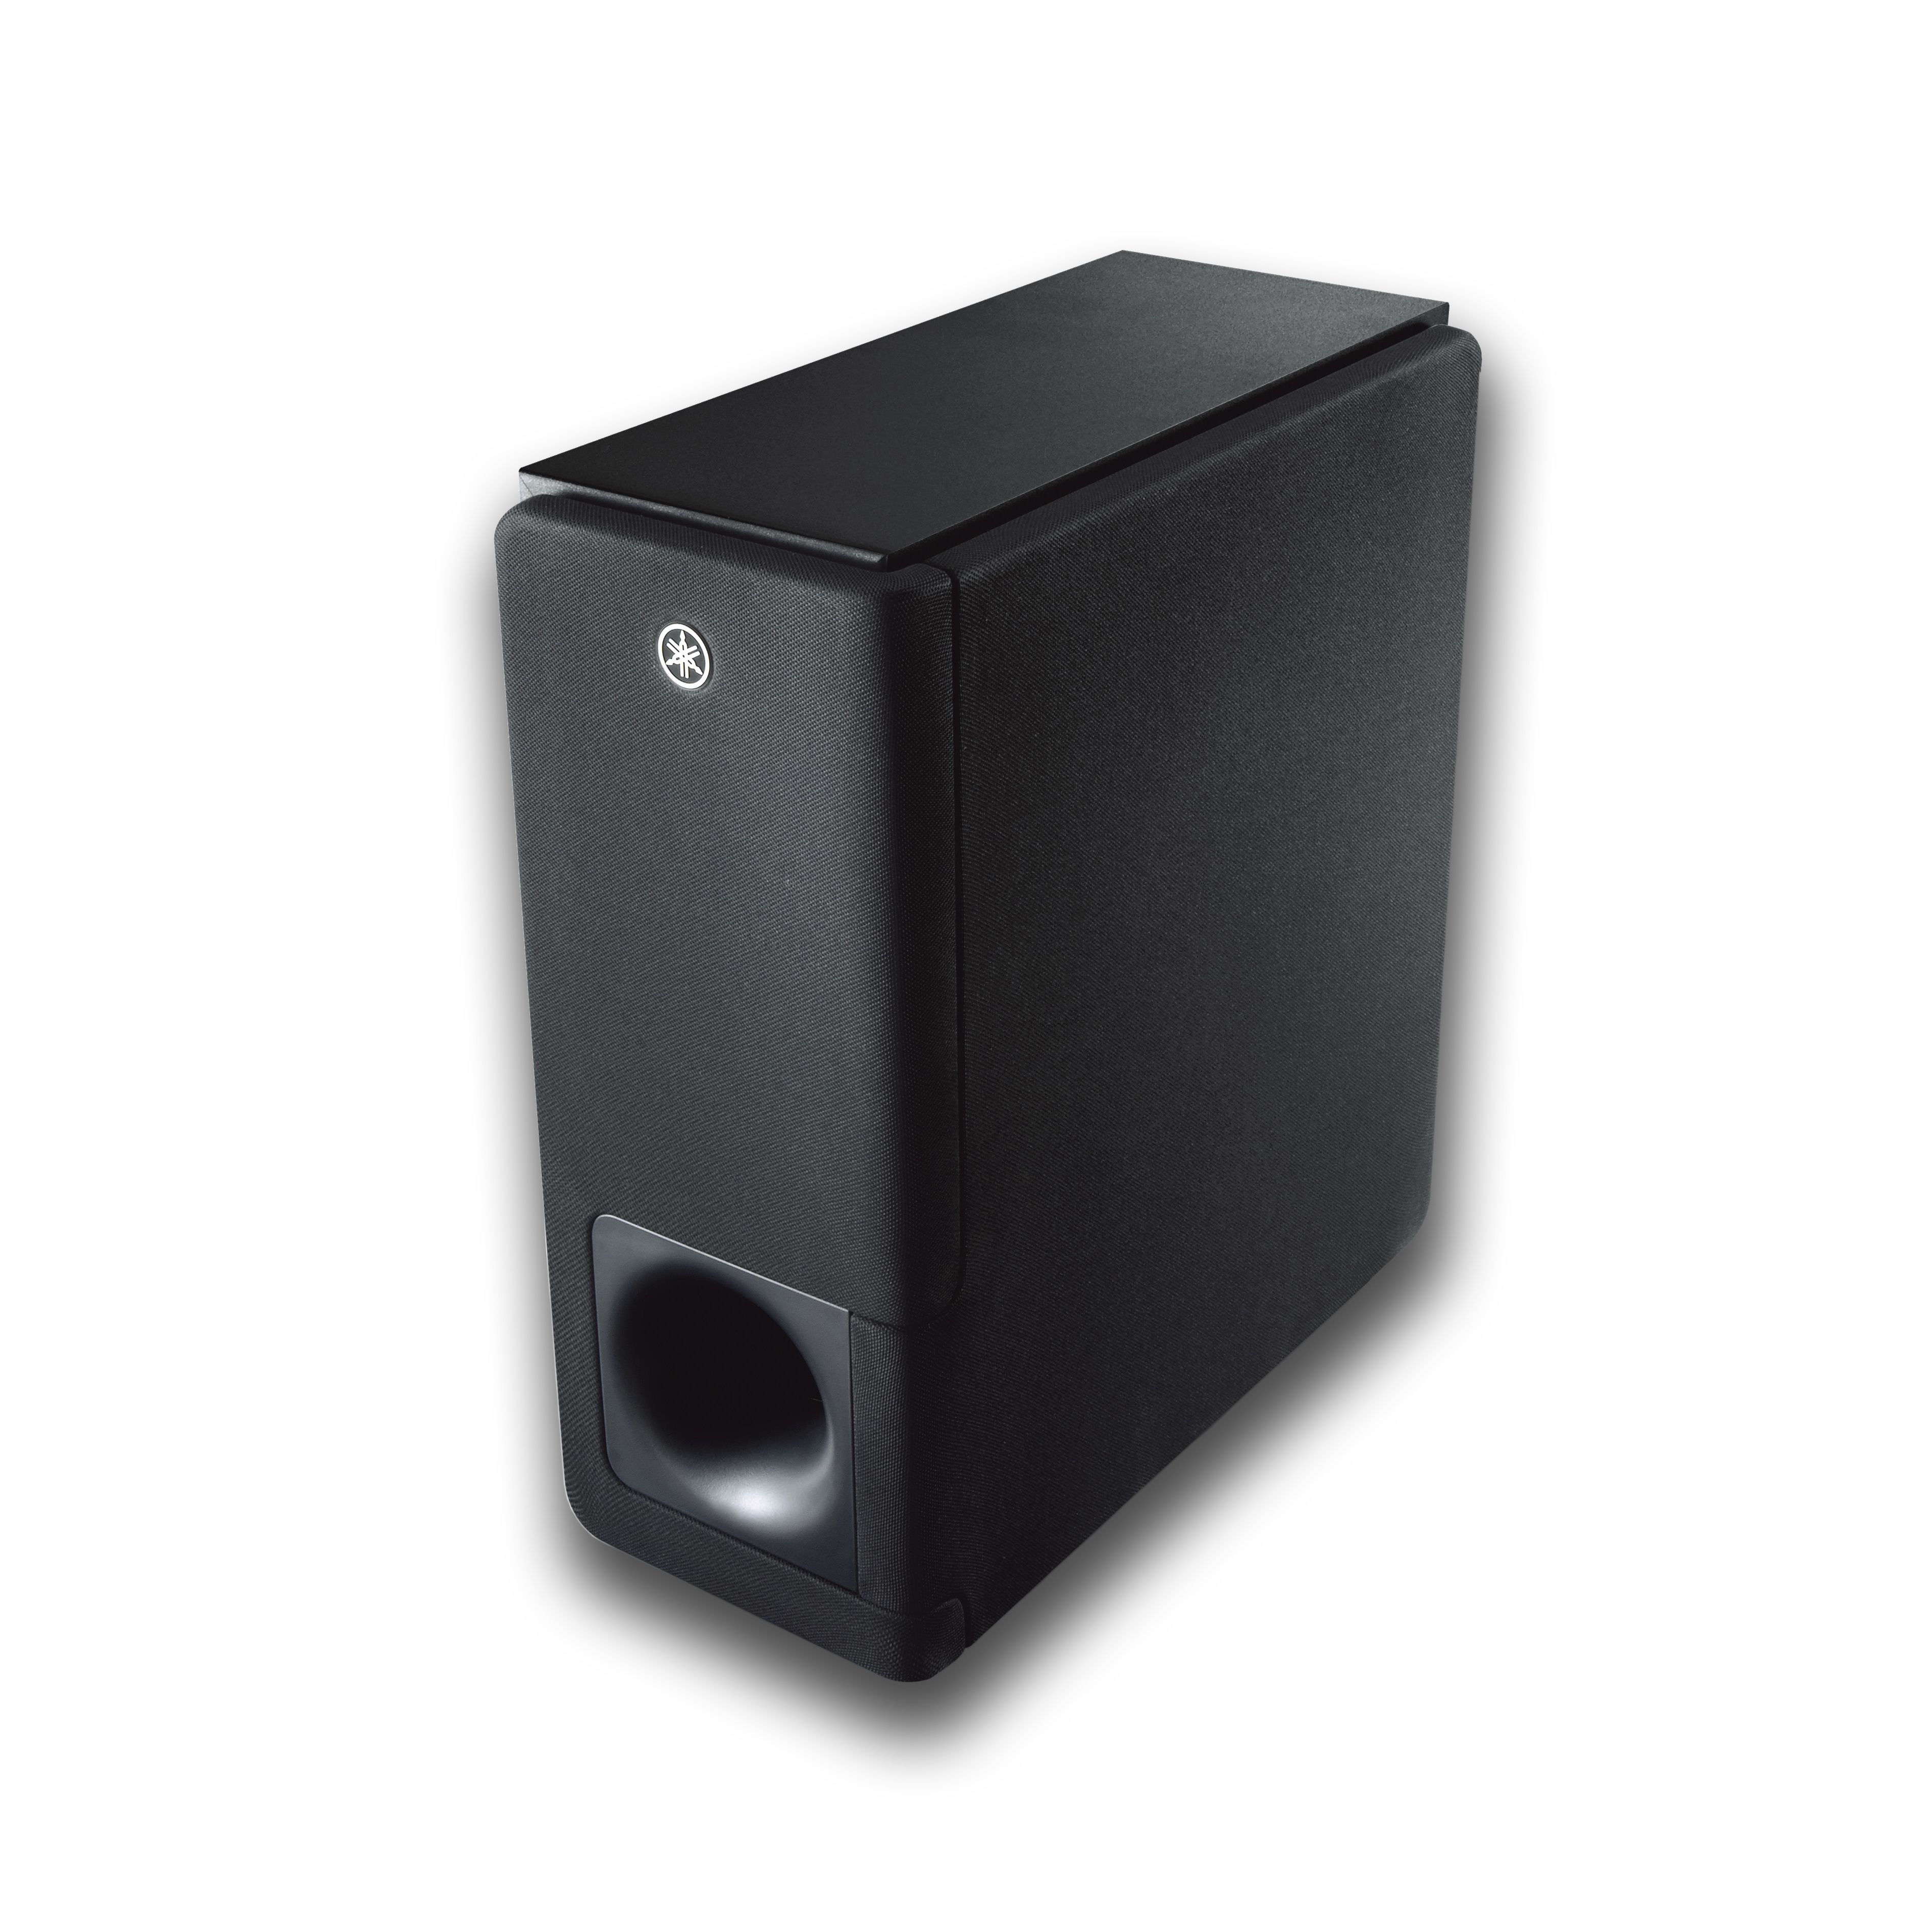 YAS-207 - Overview - Sound Bars Audio & Visual Products - Yamaha - United States